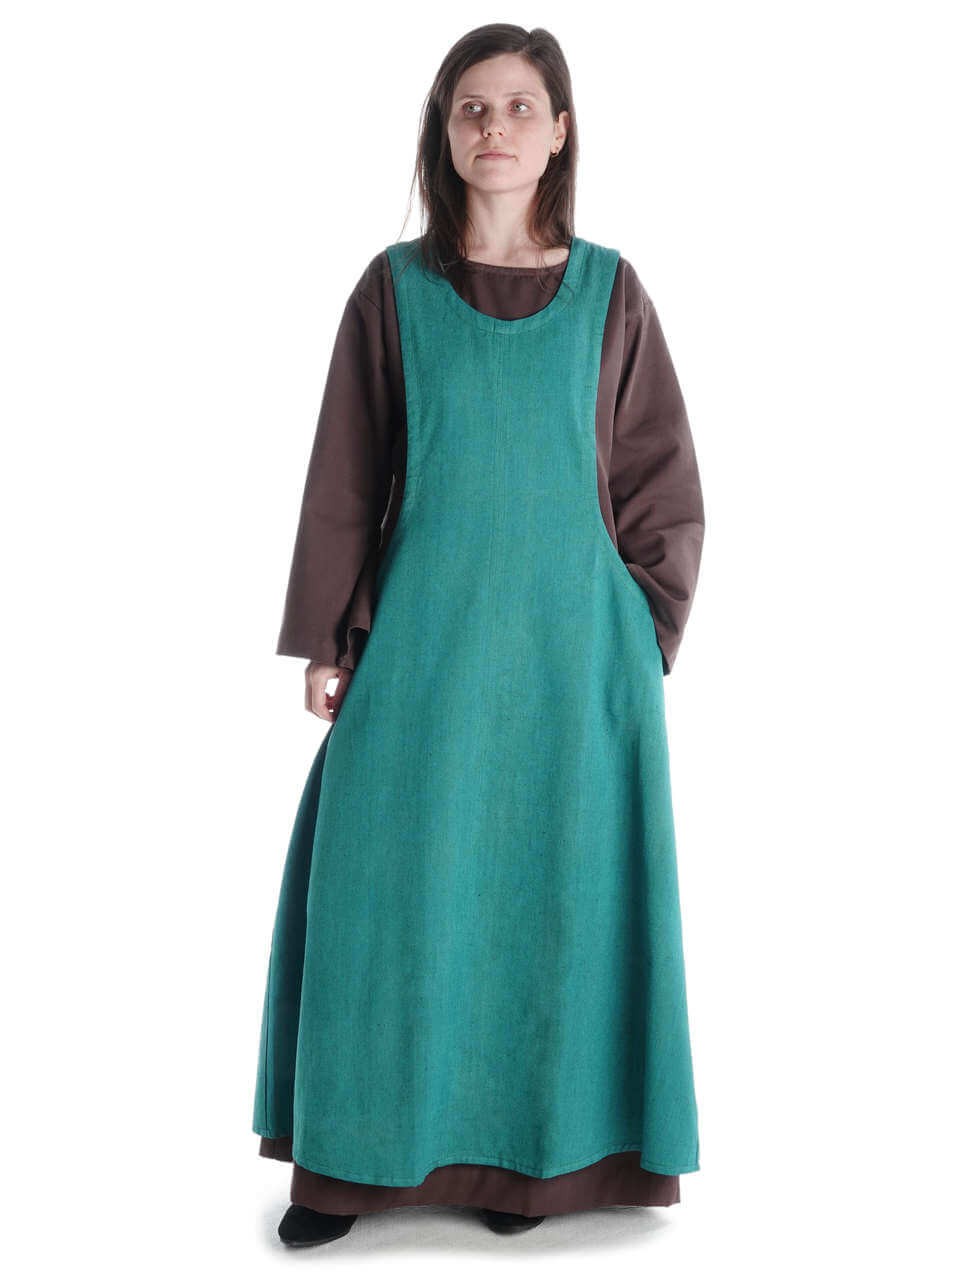 simple pretty medieval dresses